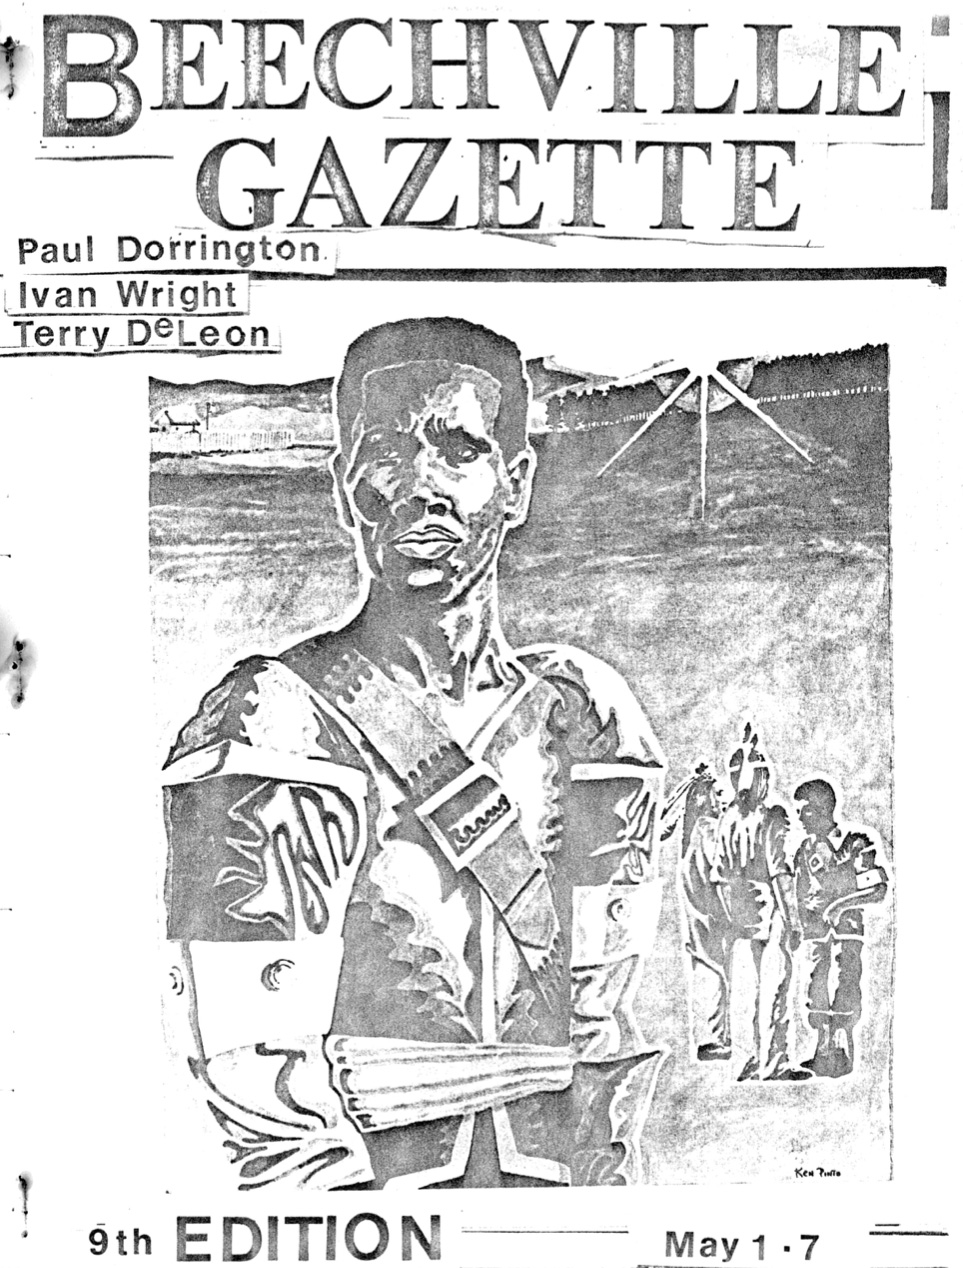 african-heritage : Beechville Gazette